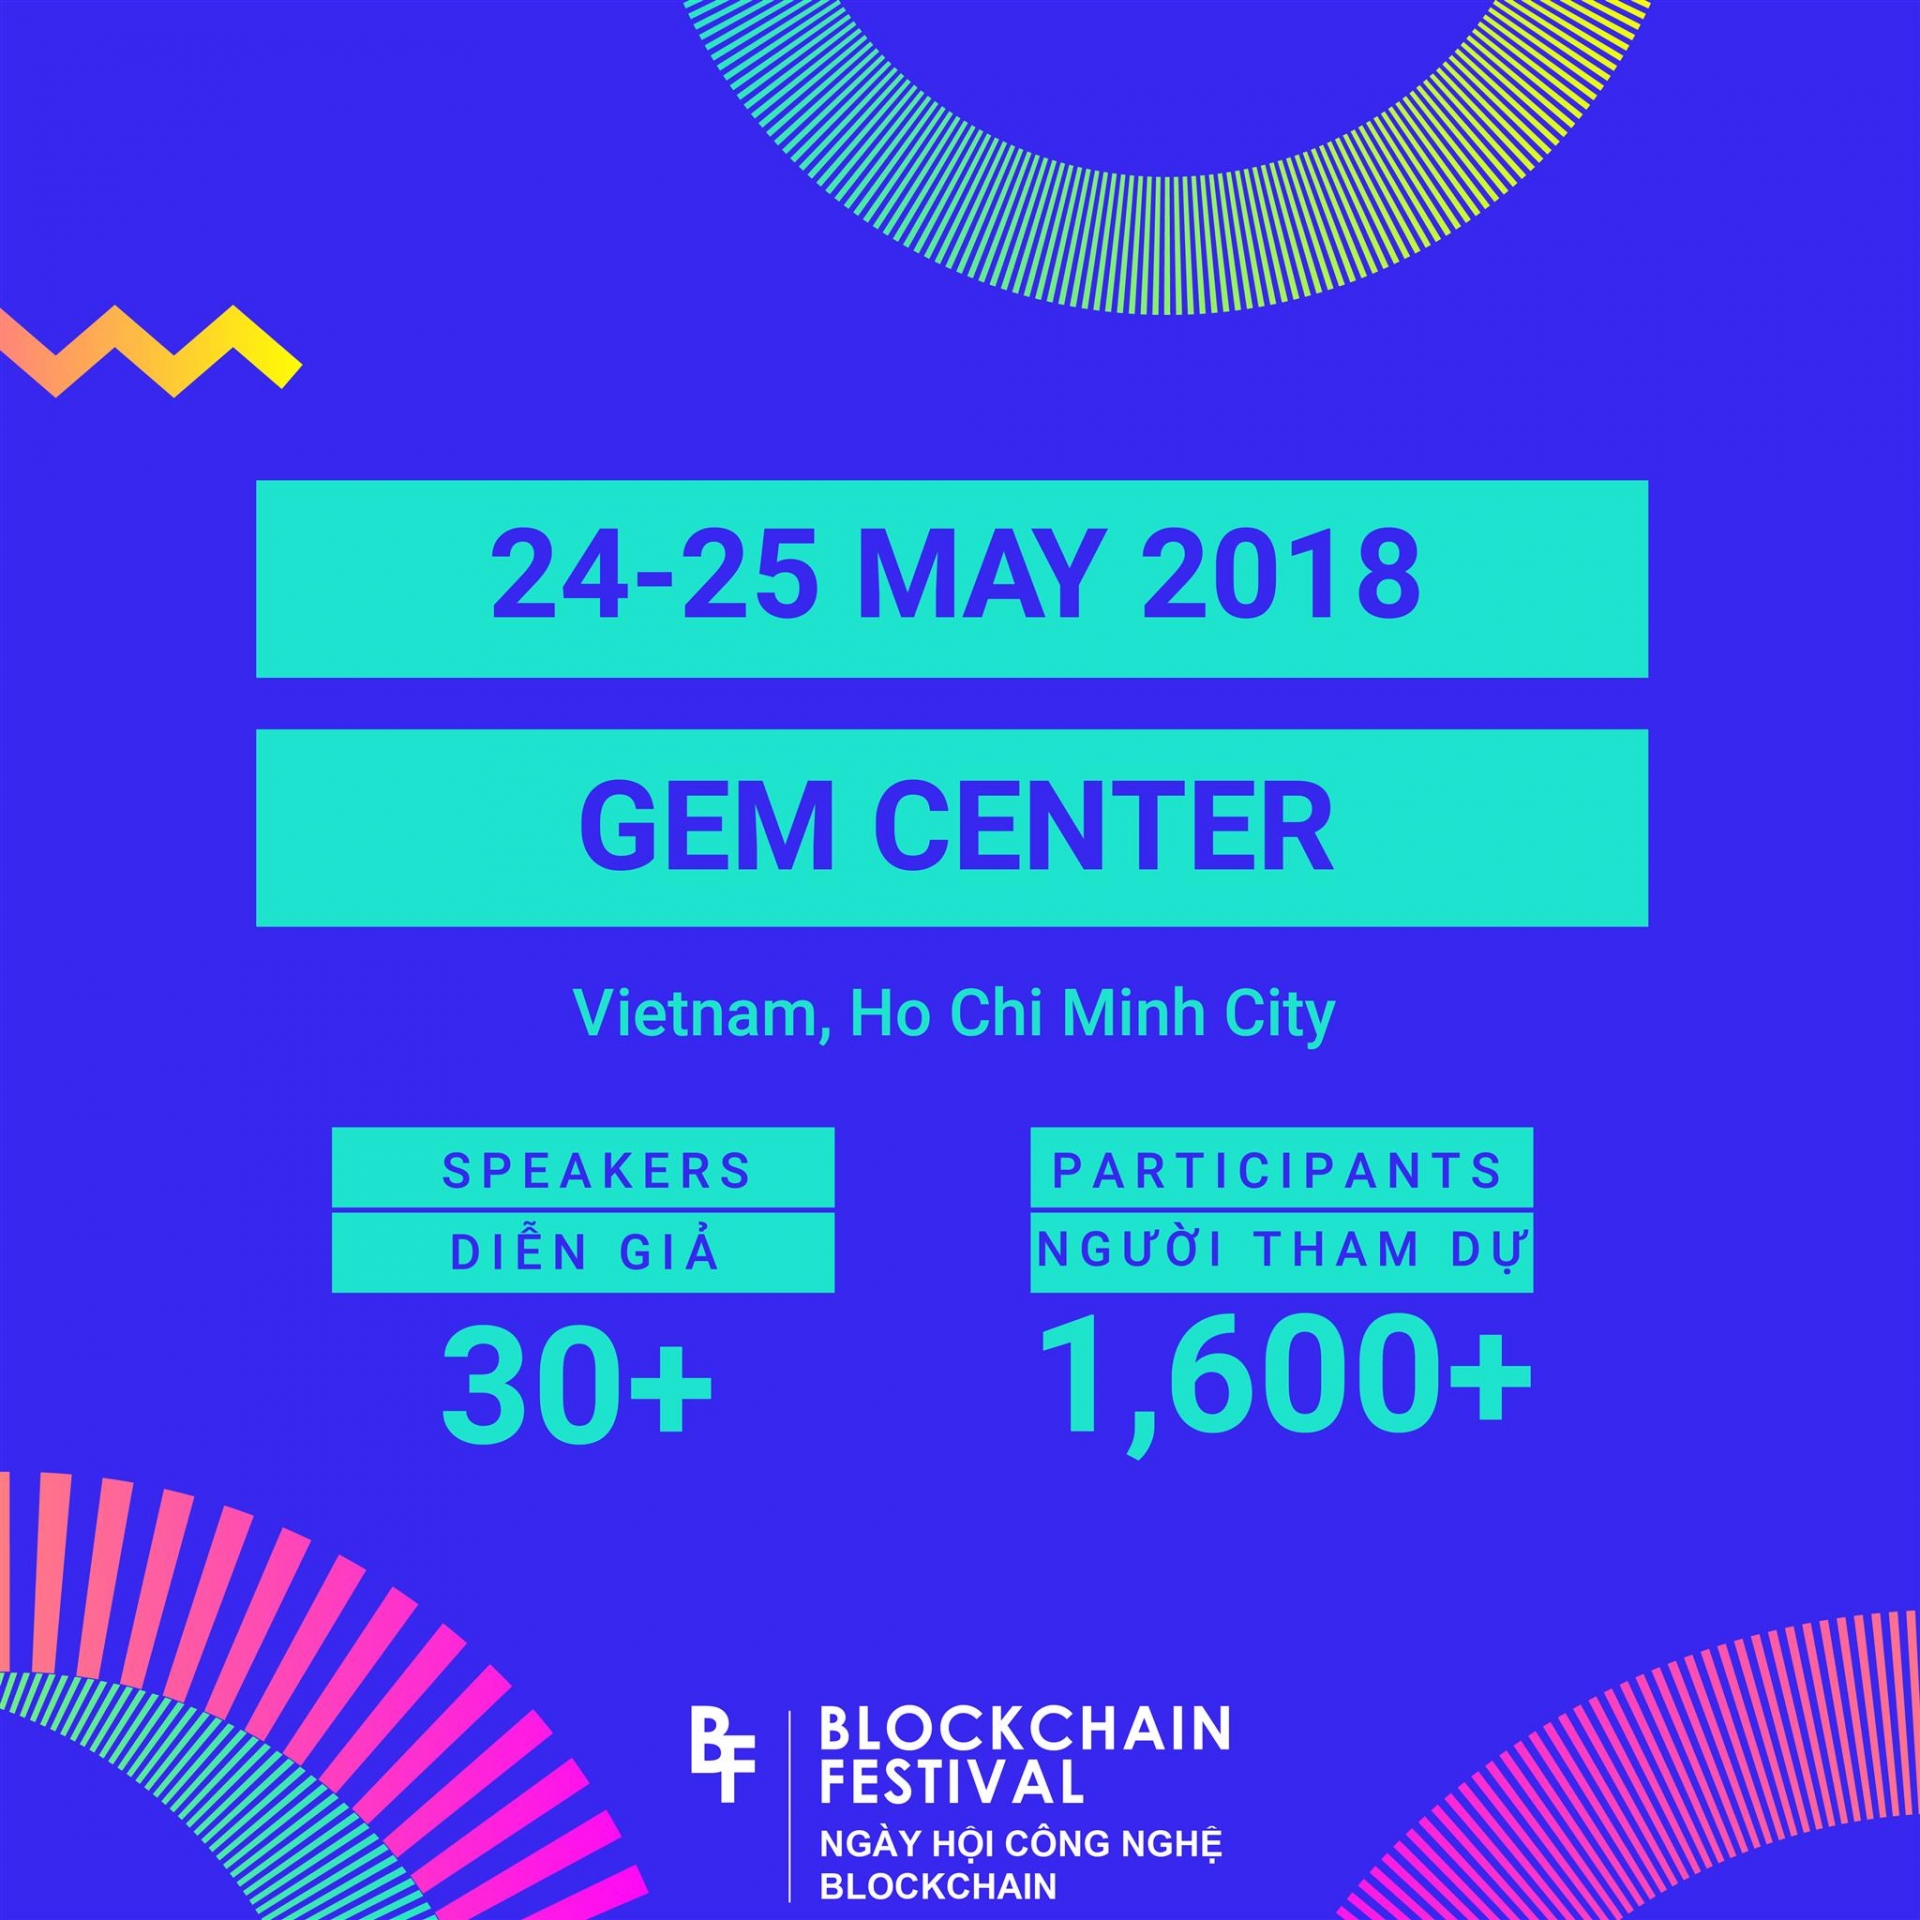 Blockchain Festival Vietnam 2018 kicks off next week